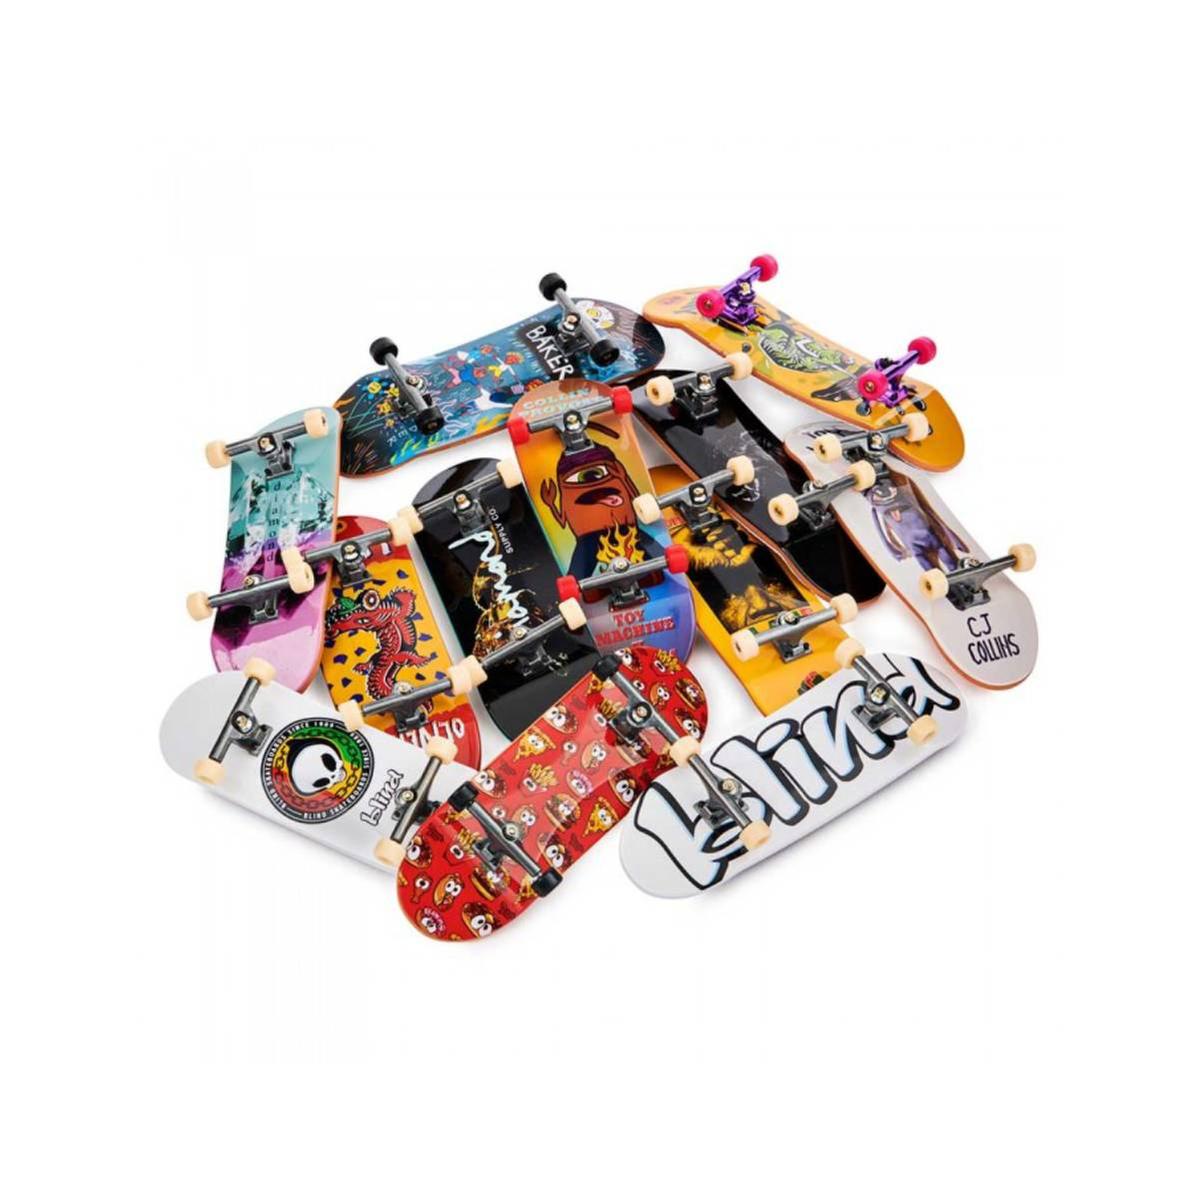 Tech Deck - Mini skate de dedos (varios colores) | Teck Deck - Flick Trix |  Toys"R"Us España